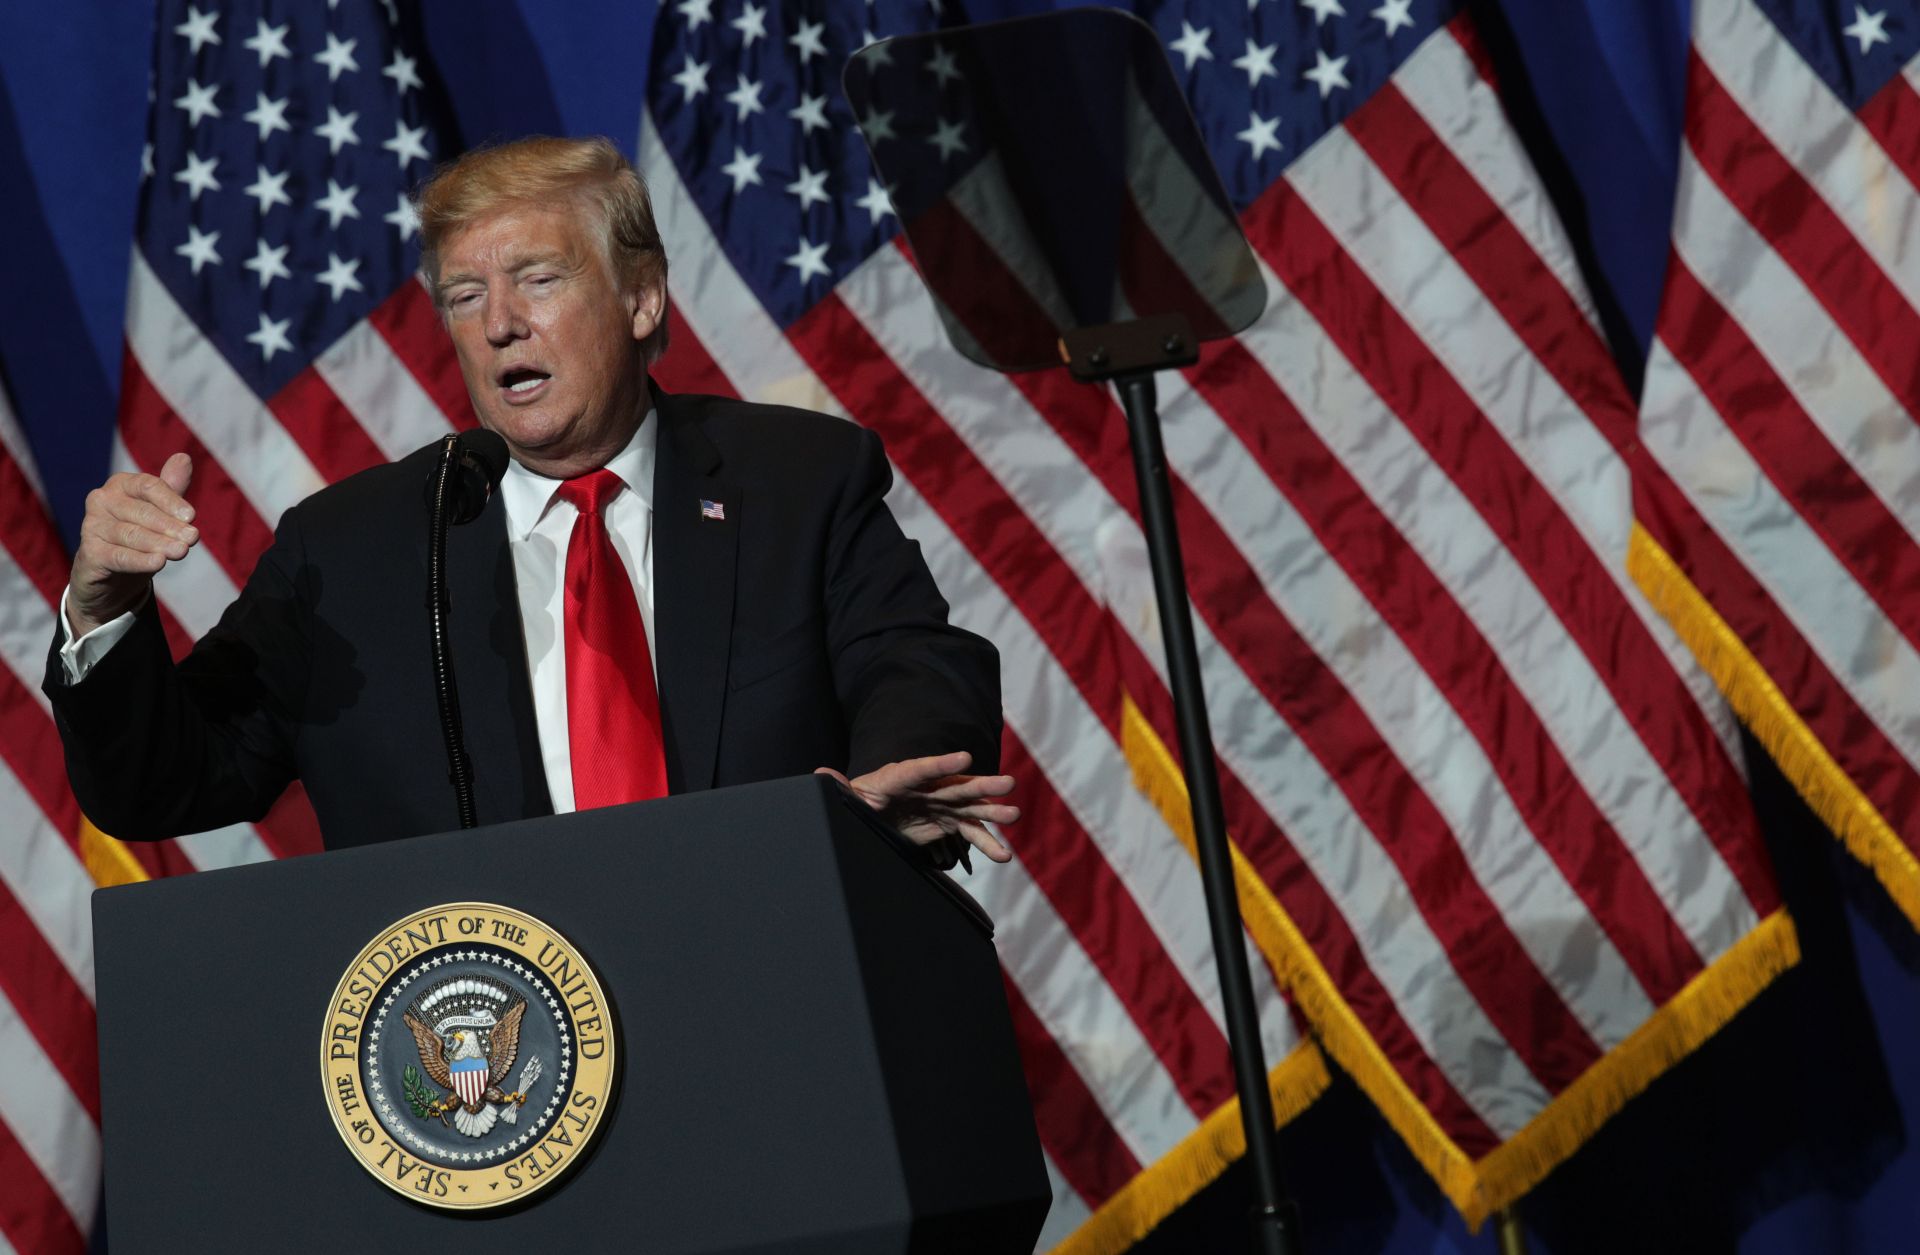 U.S. President Donald Trump addresses the National Association of Realtors in Washington on May 17, 2019.